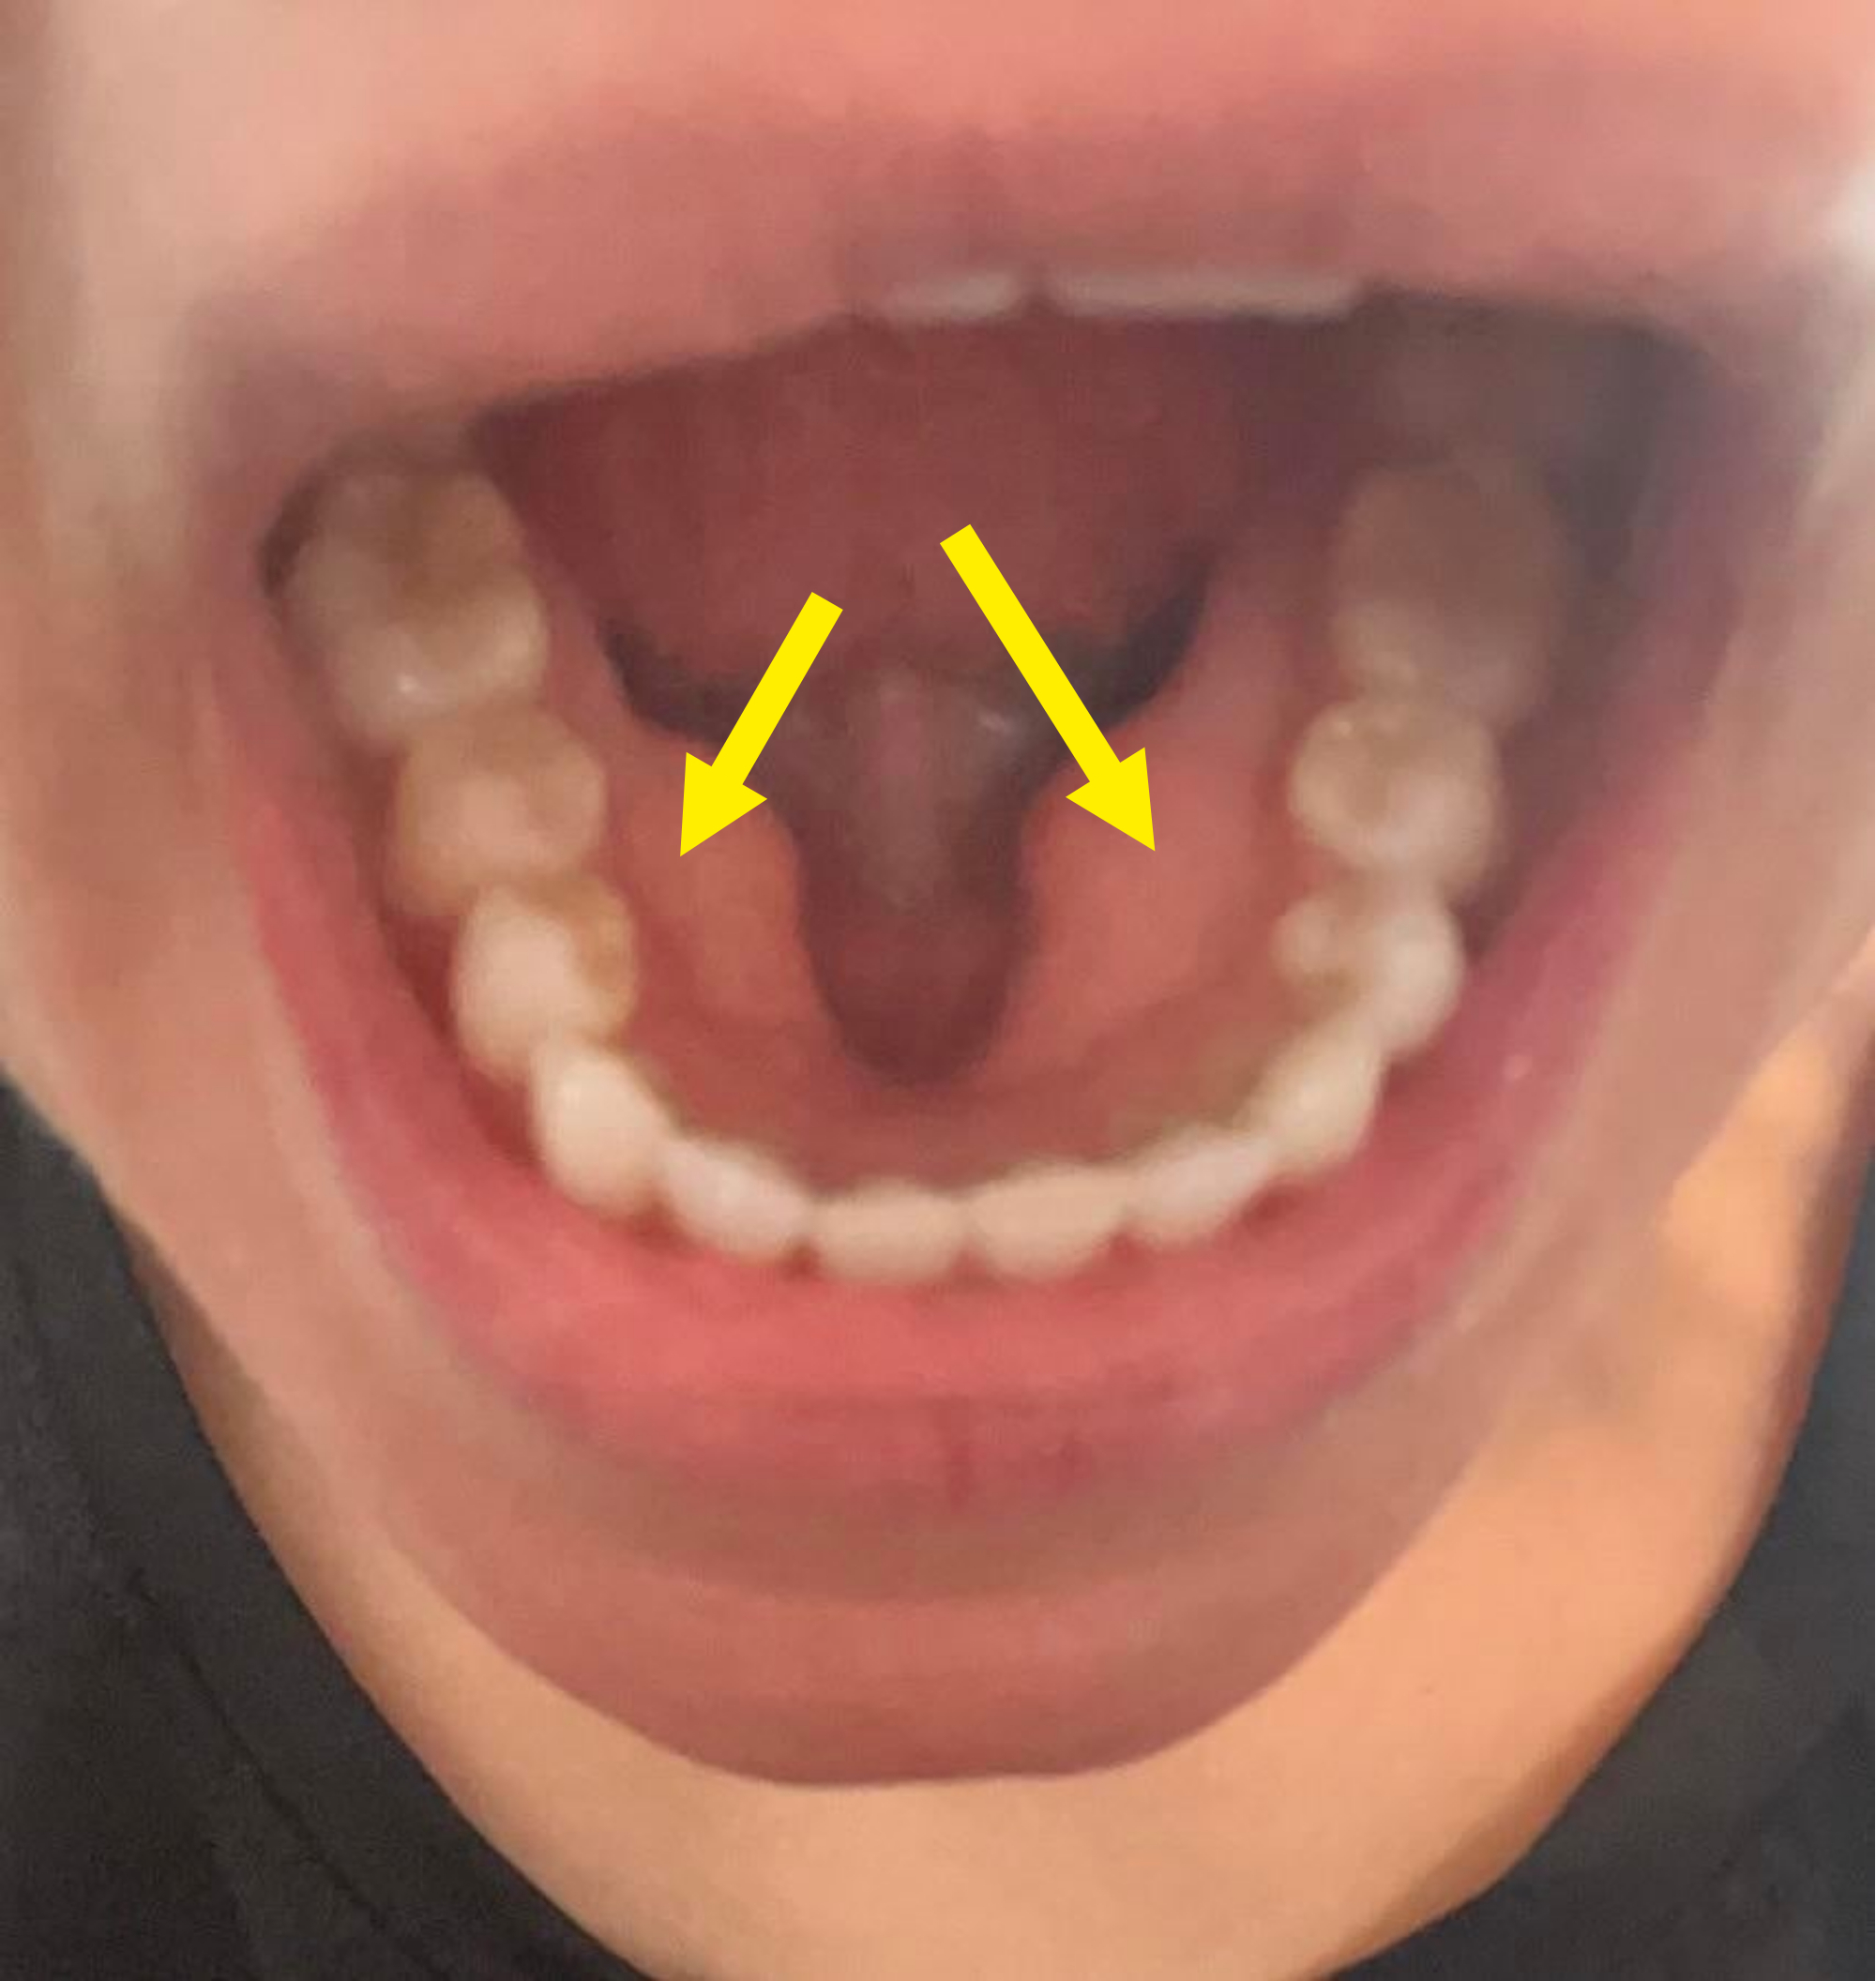 A mouth with mandibular tori